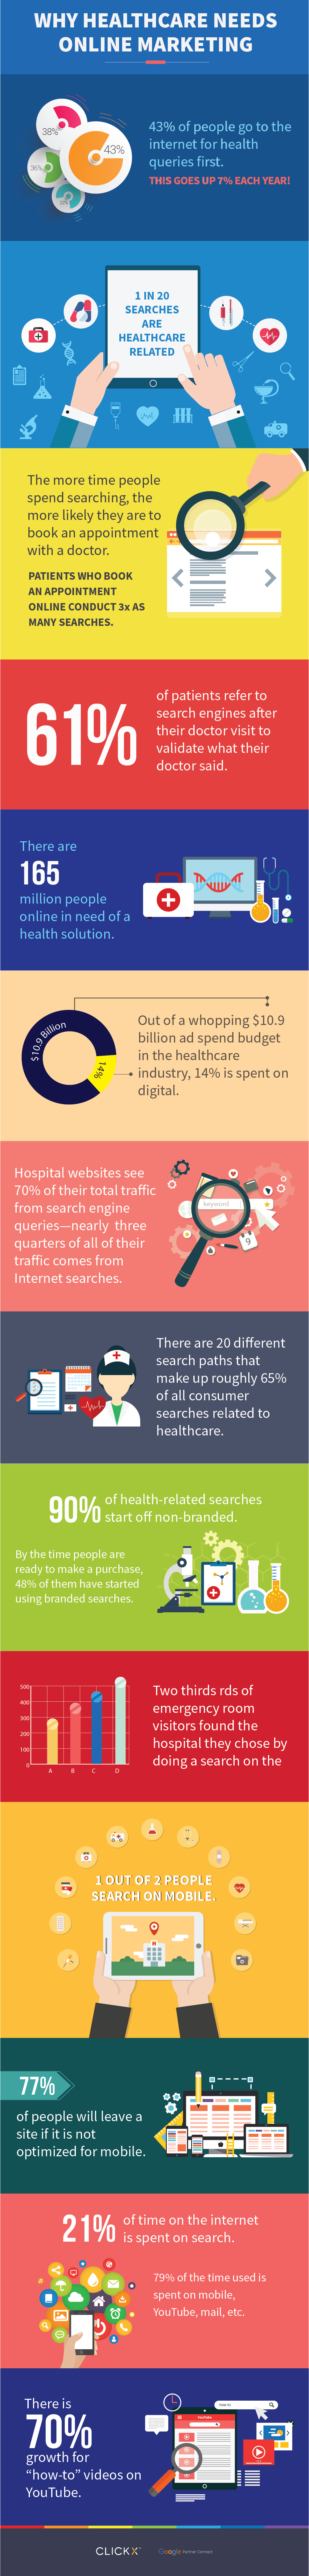 Why Healthcare Needs Online Marketing Infographic | Clickx.io